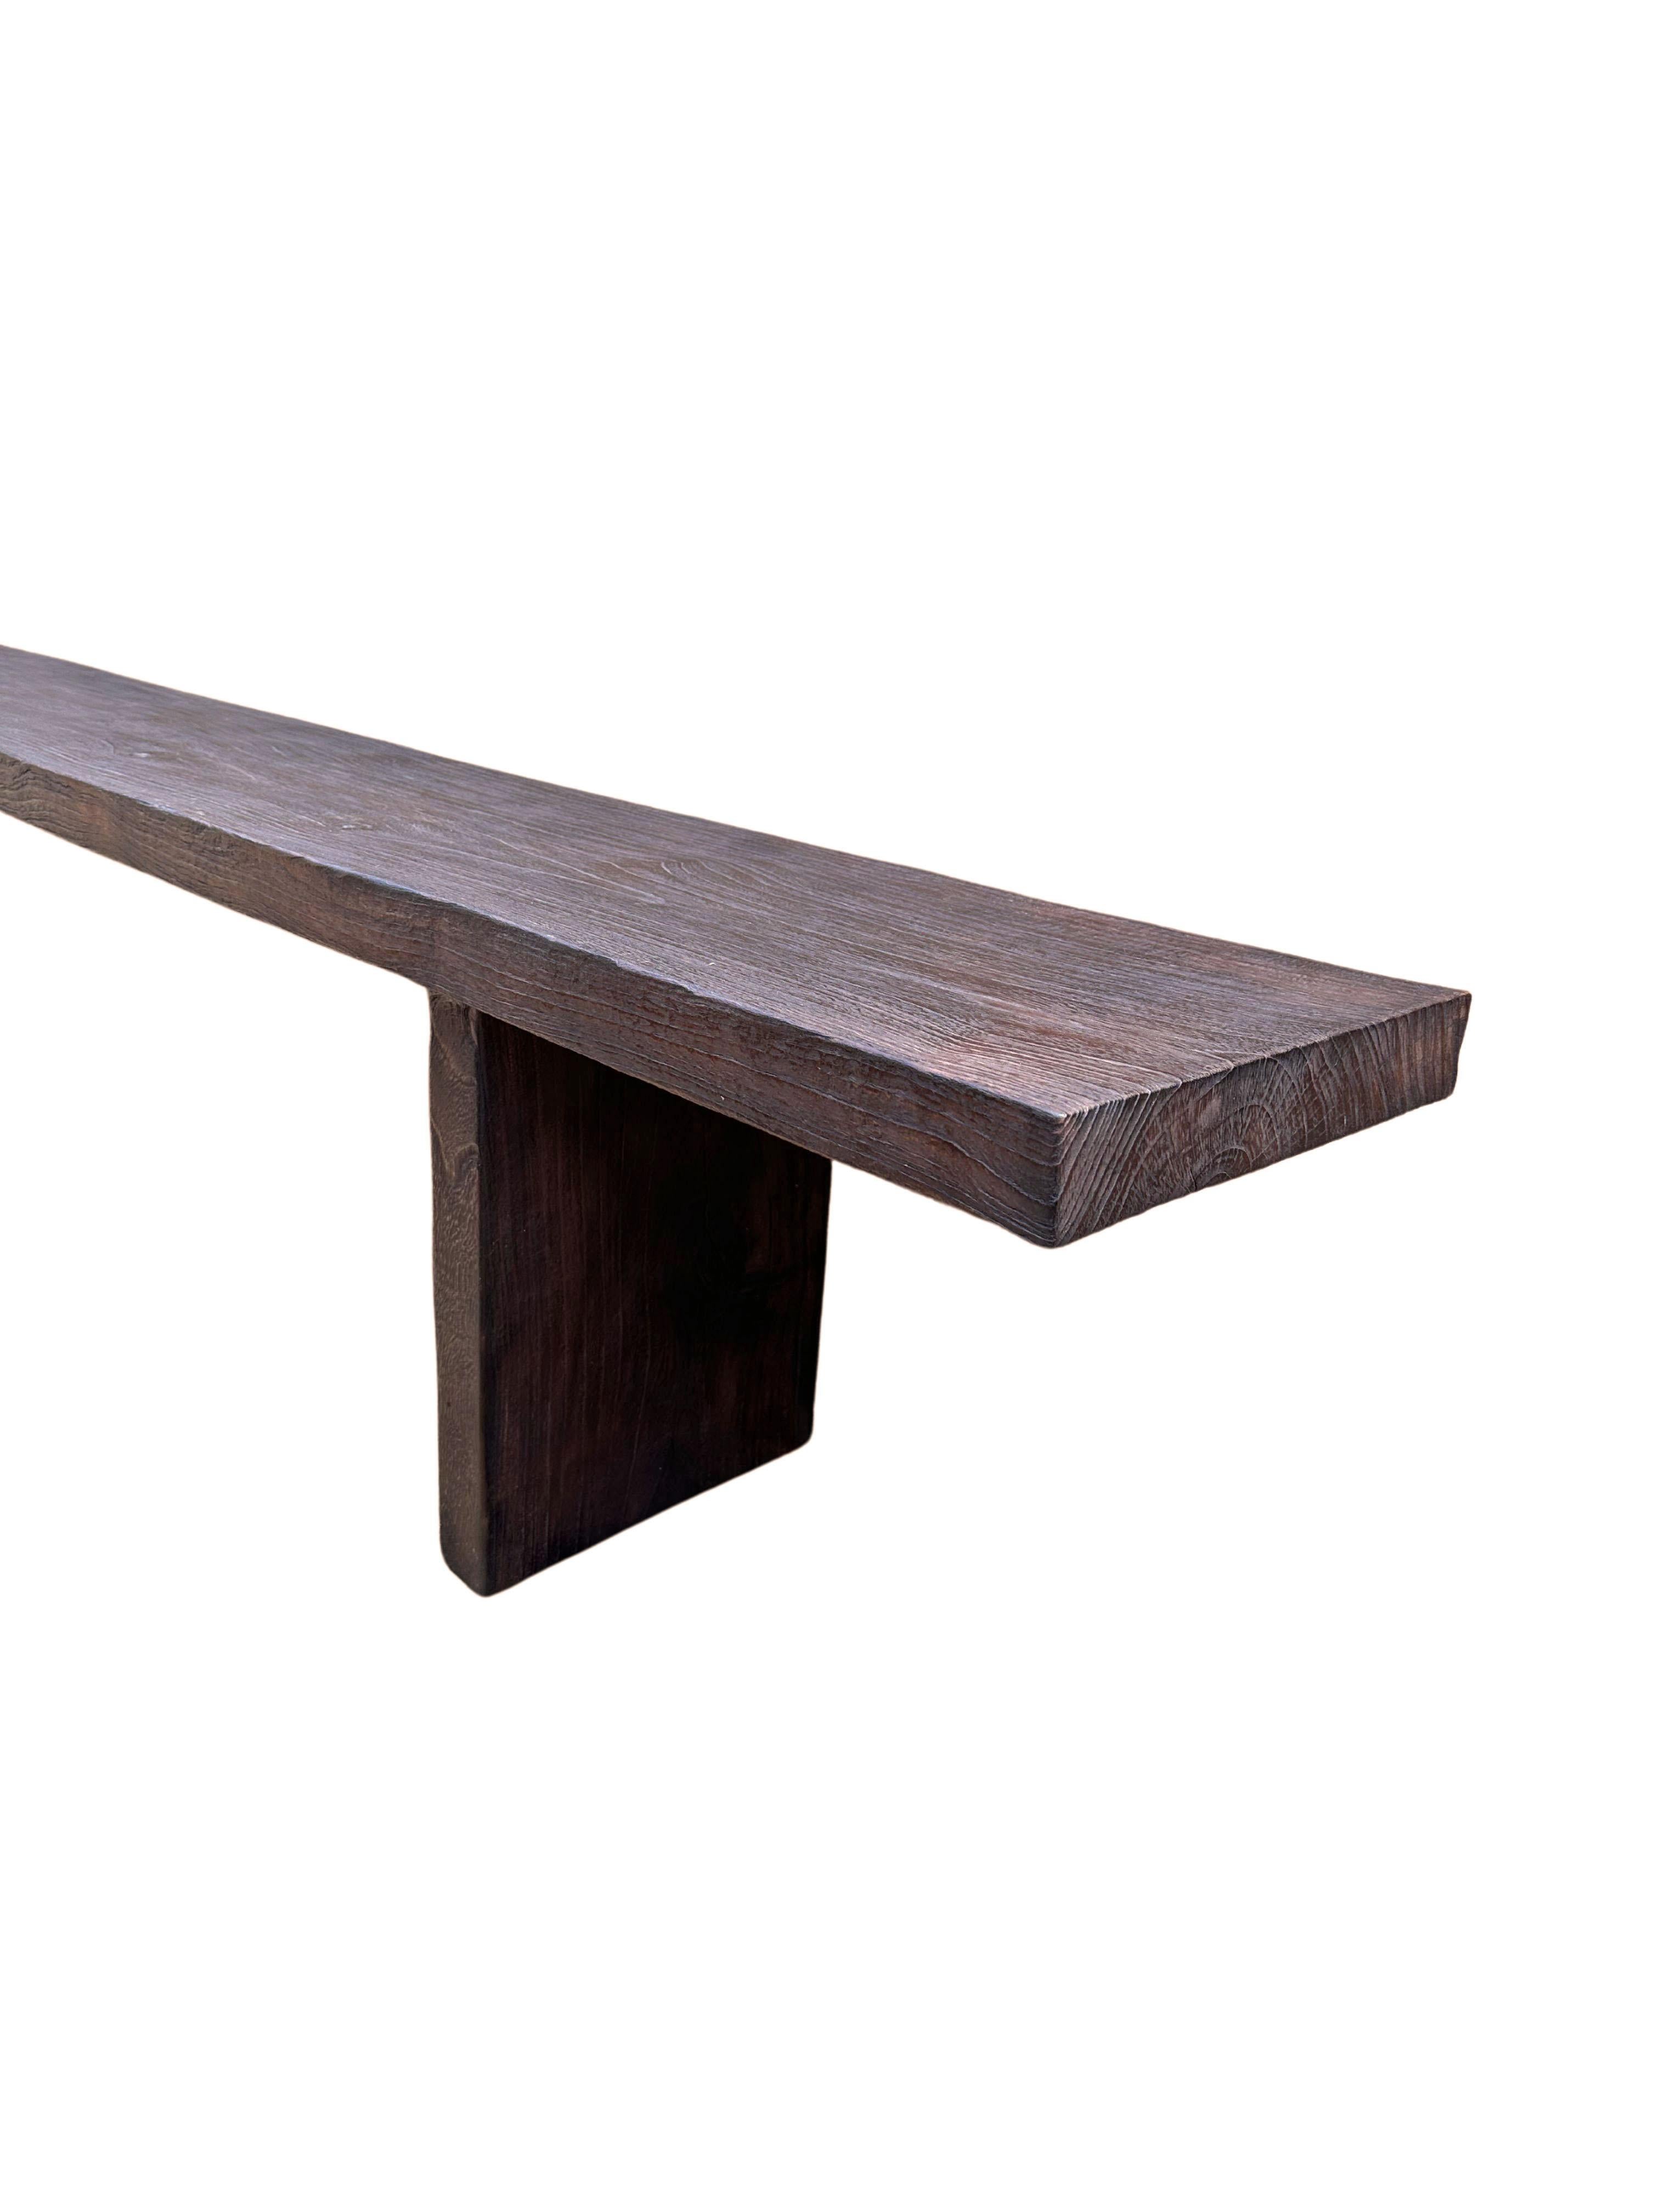 Contemporary Sculptural Teak Wood Bench Modern Organic, Stunning Textures, Espresso Finish For Sale